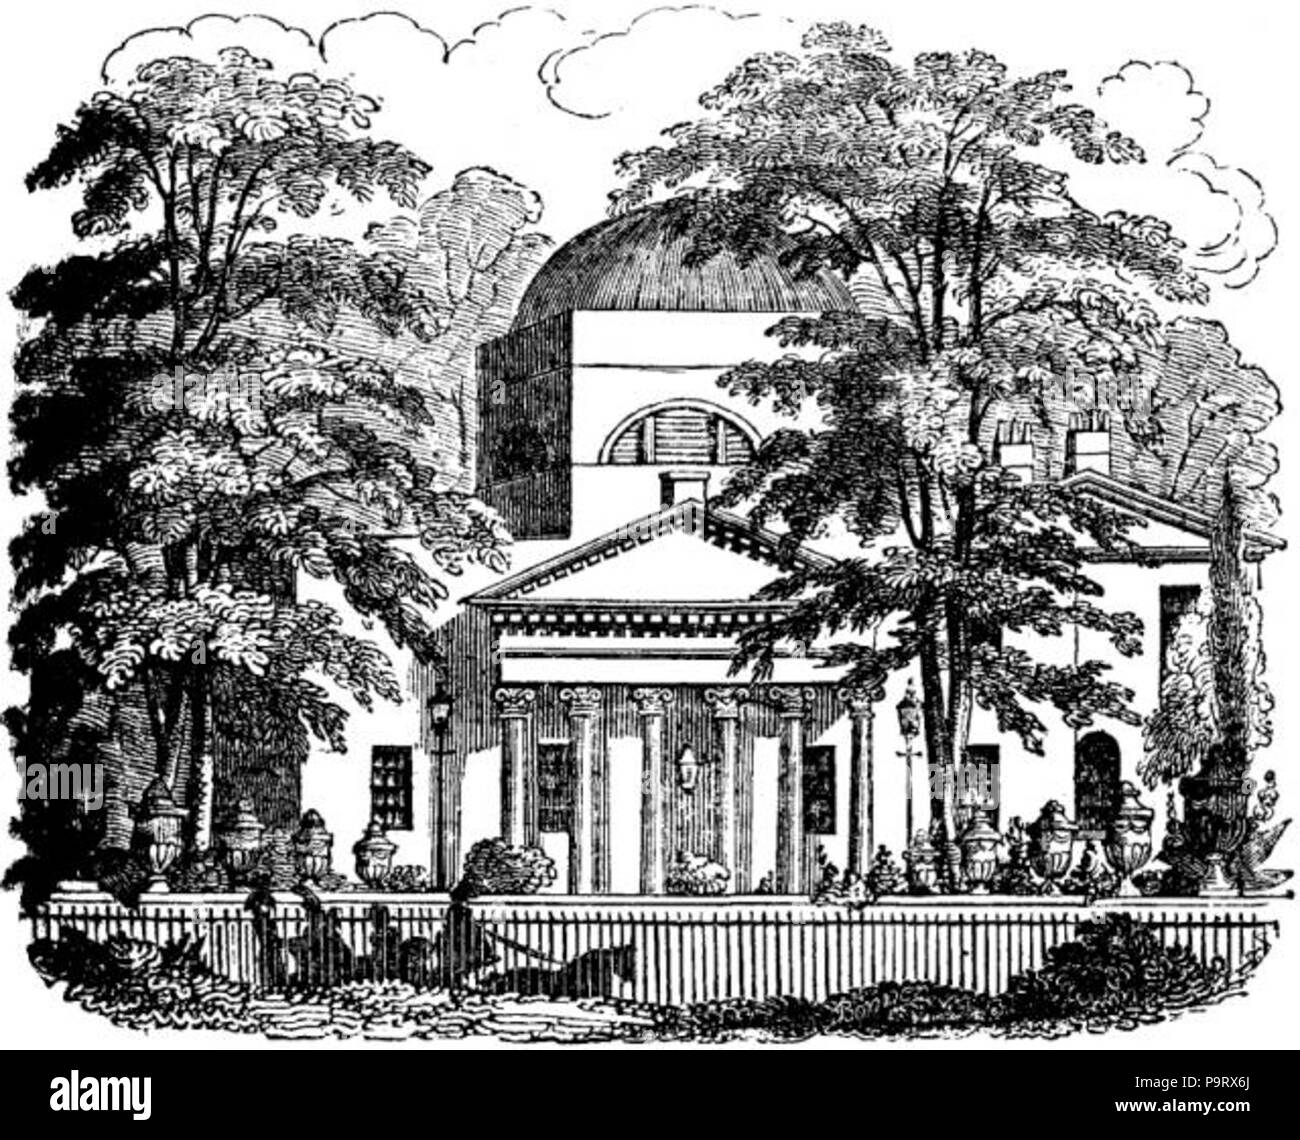 302 Chatsworth House Engraving Stock Photo